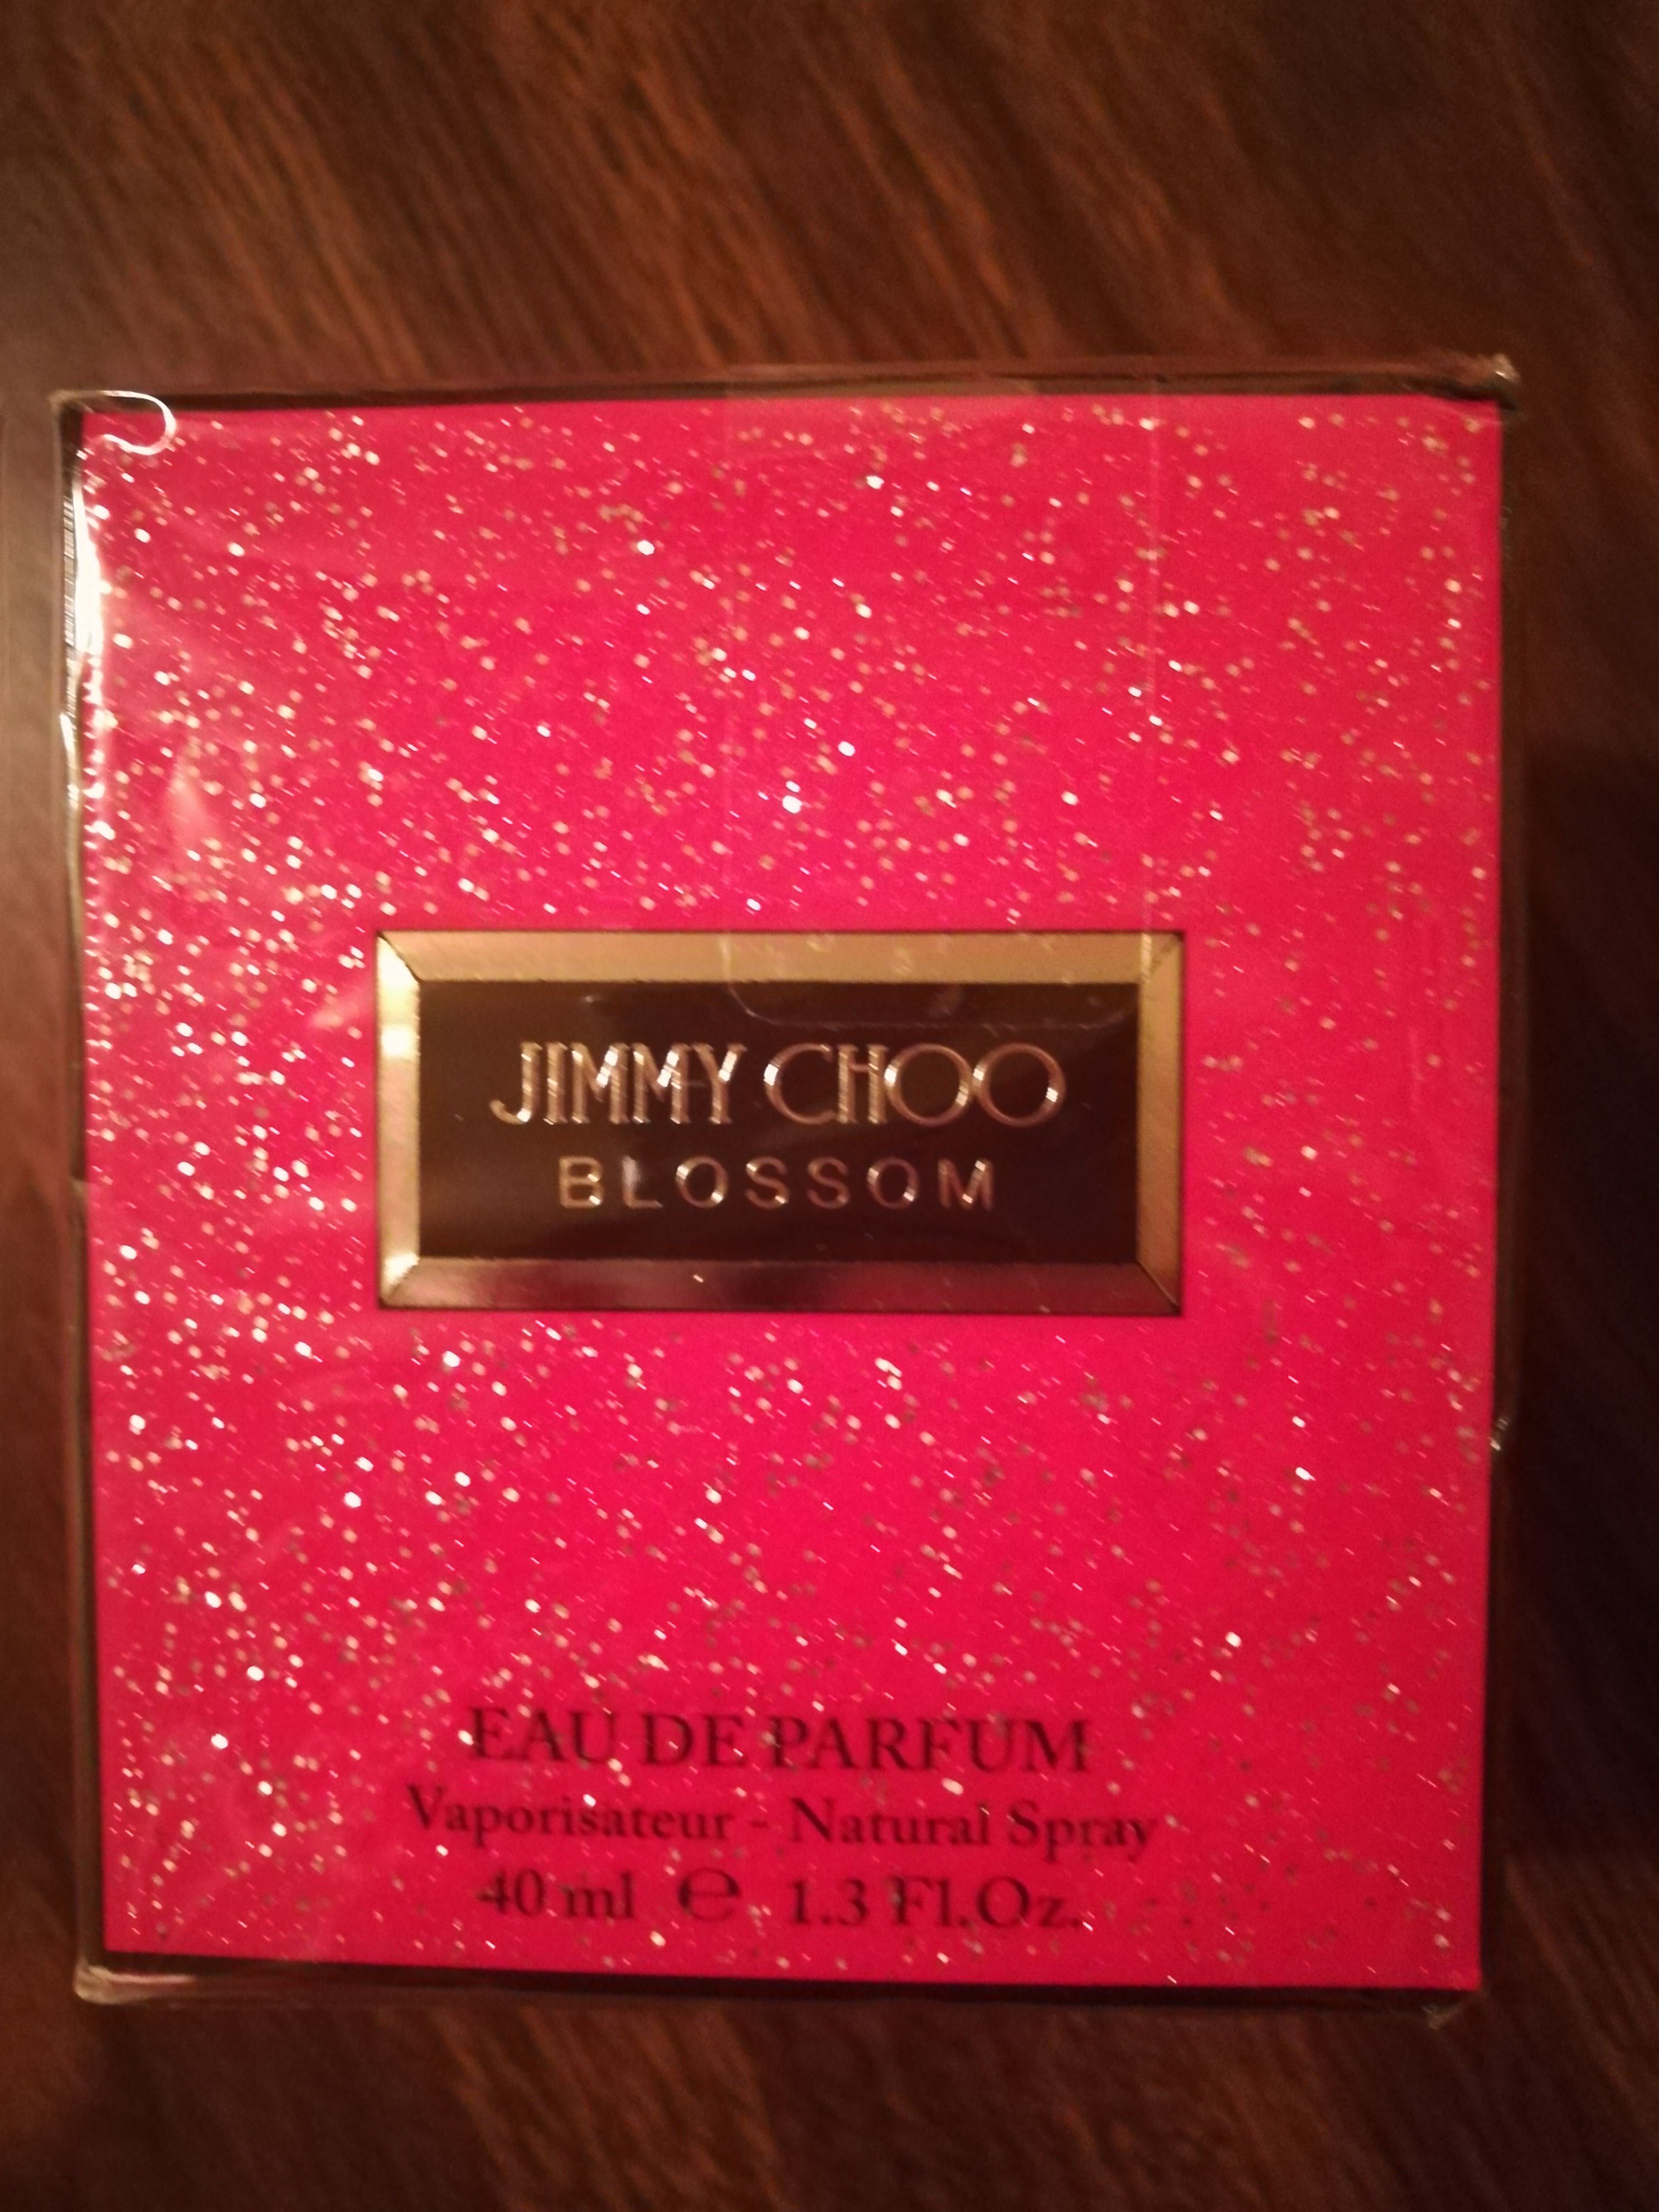 Jimmy Choo "Blossom" fragrance